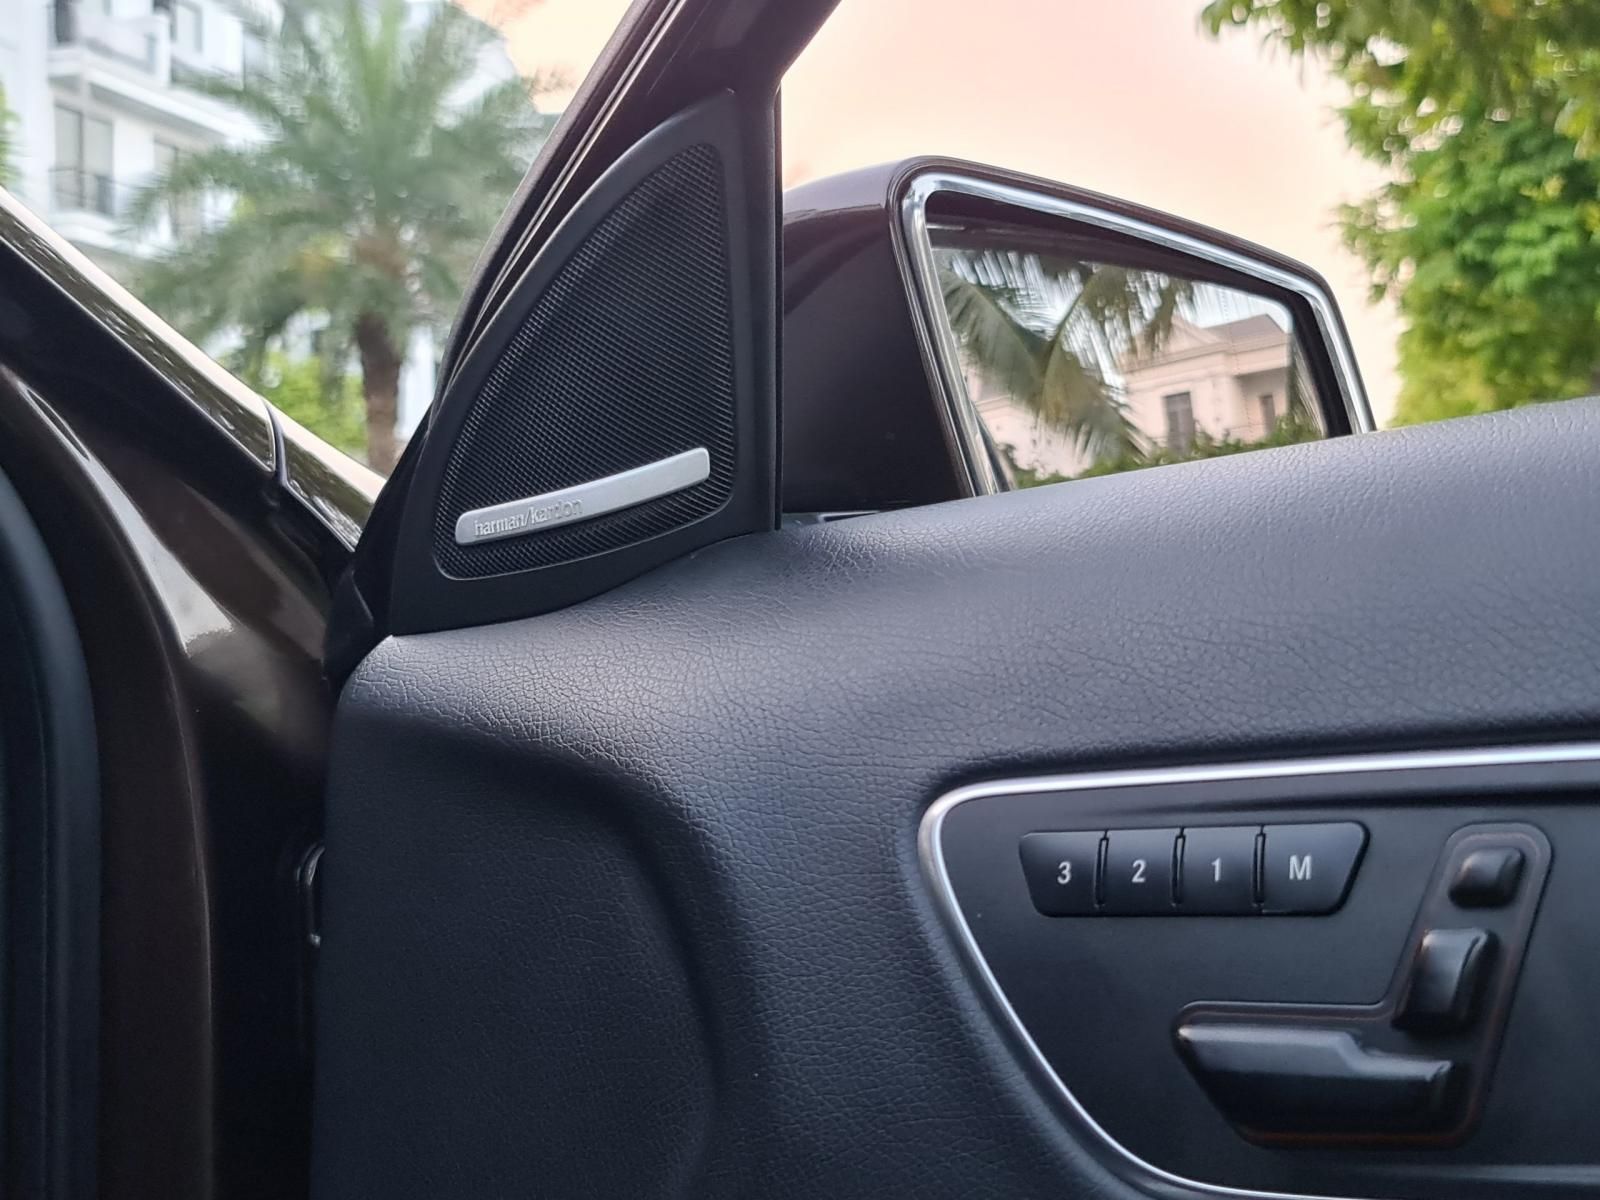 Mercedes-Benz GLA 250 2015 - Màu nâu, nội thất đen